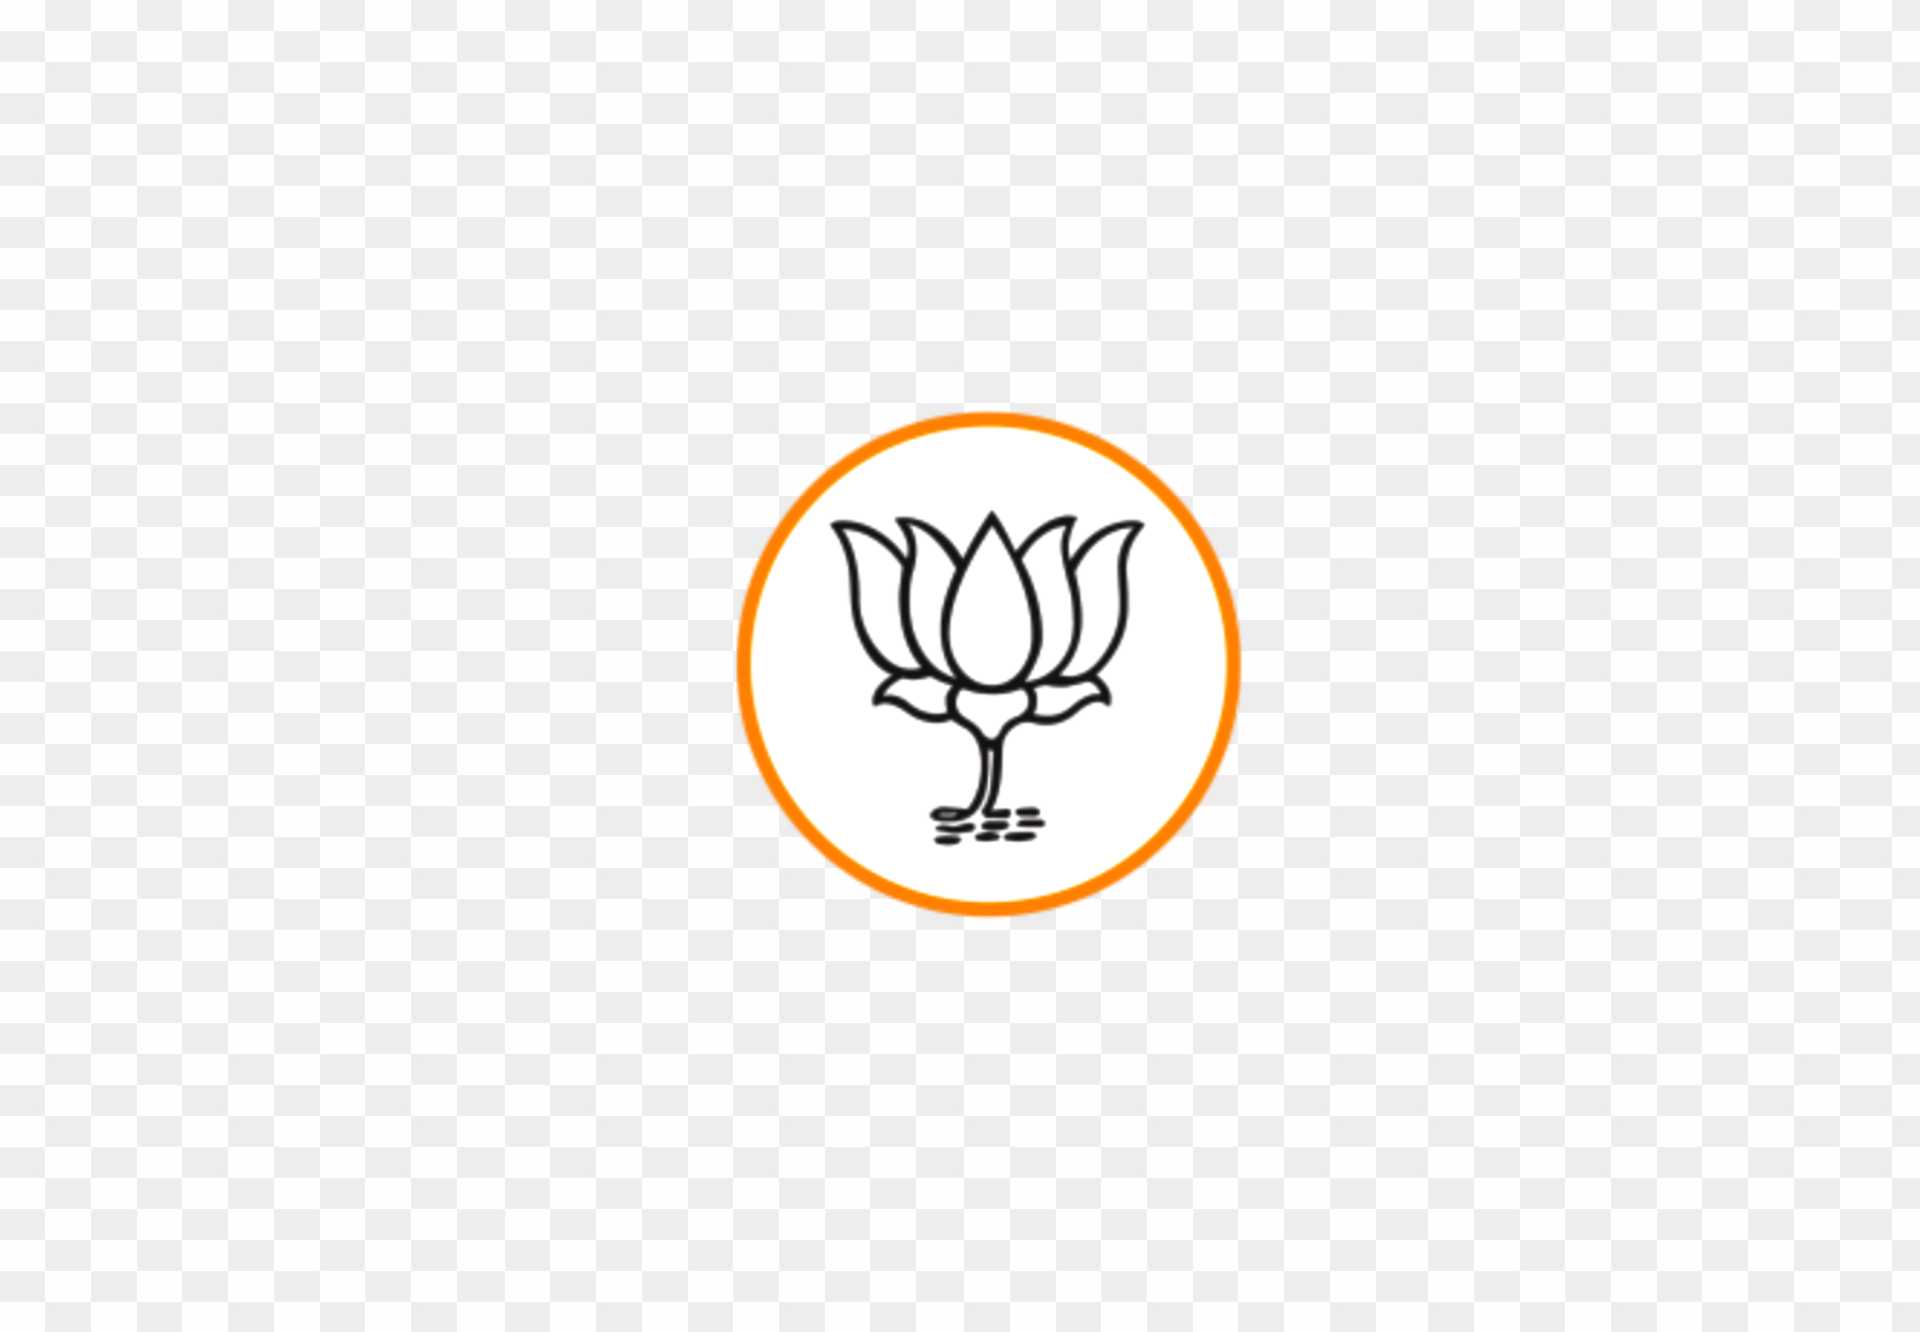 BJP jana chaitanya yatra png logo for posters and banners | naveengfx